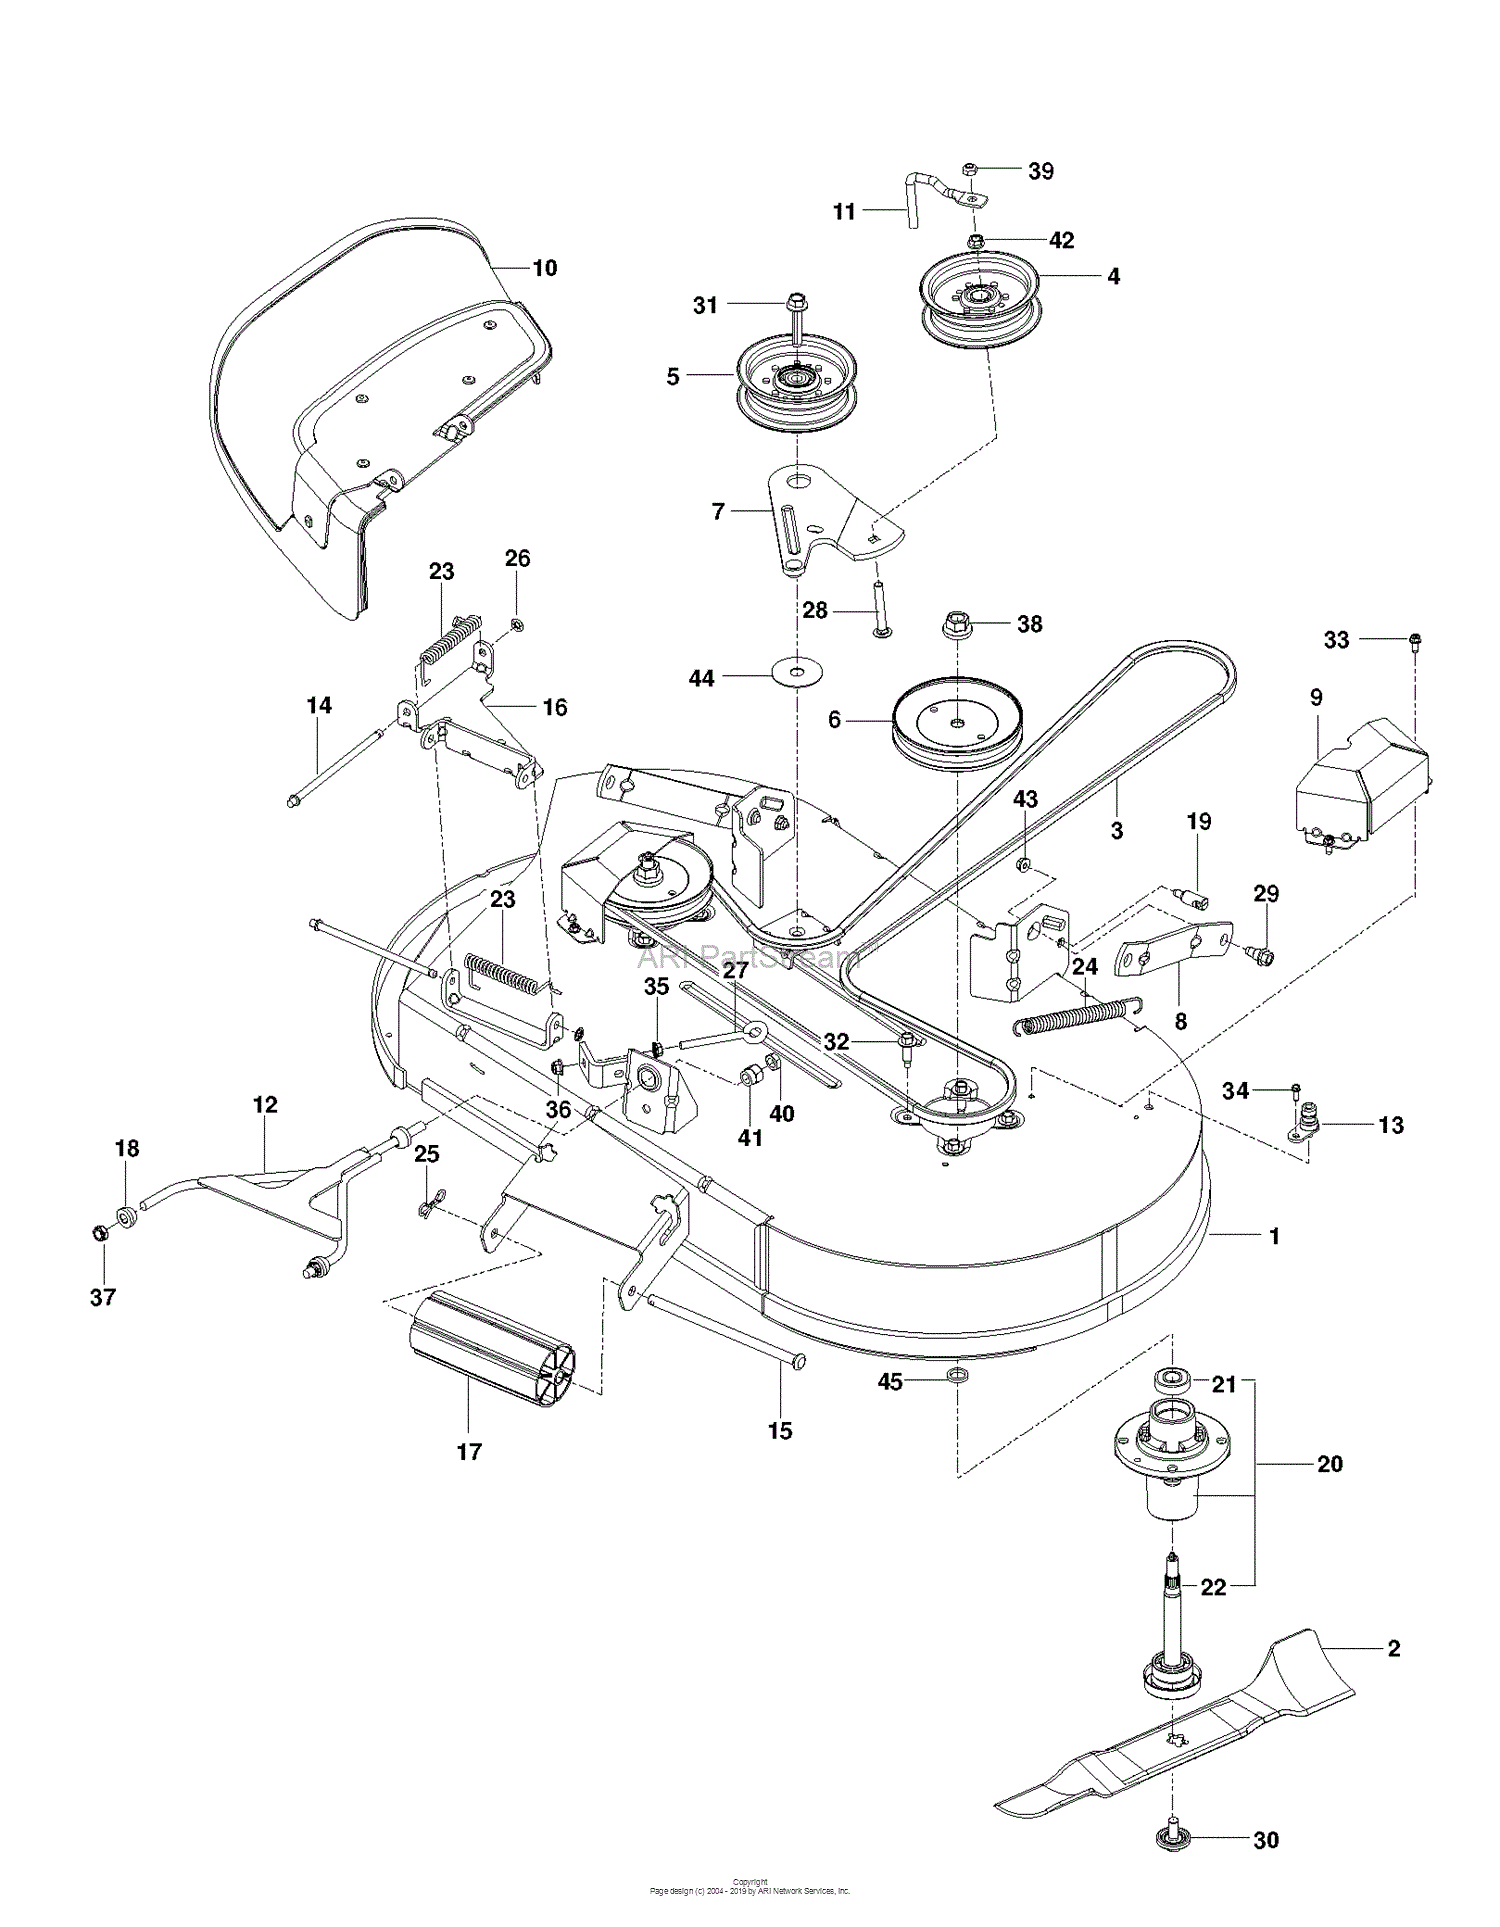 Husqvarna Zero Turn Parts Diagram Wiring Diagram